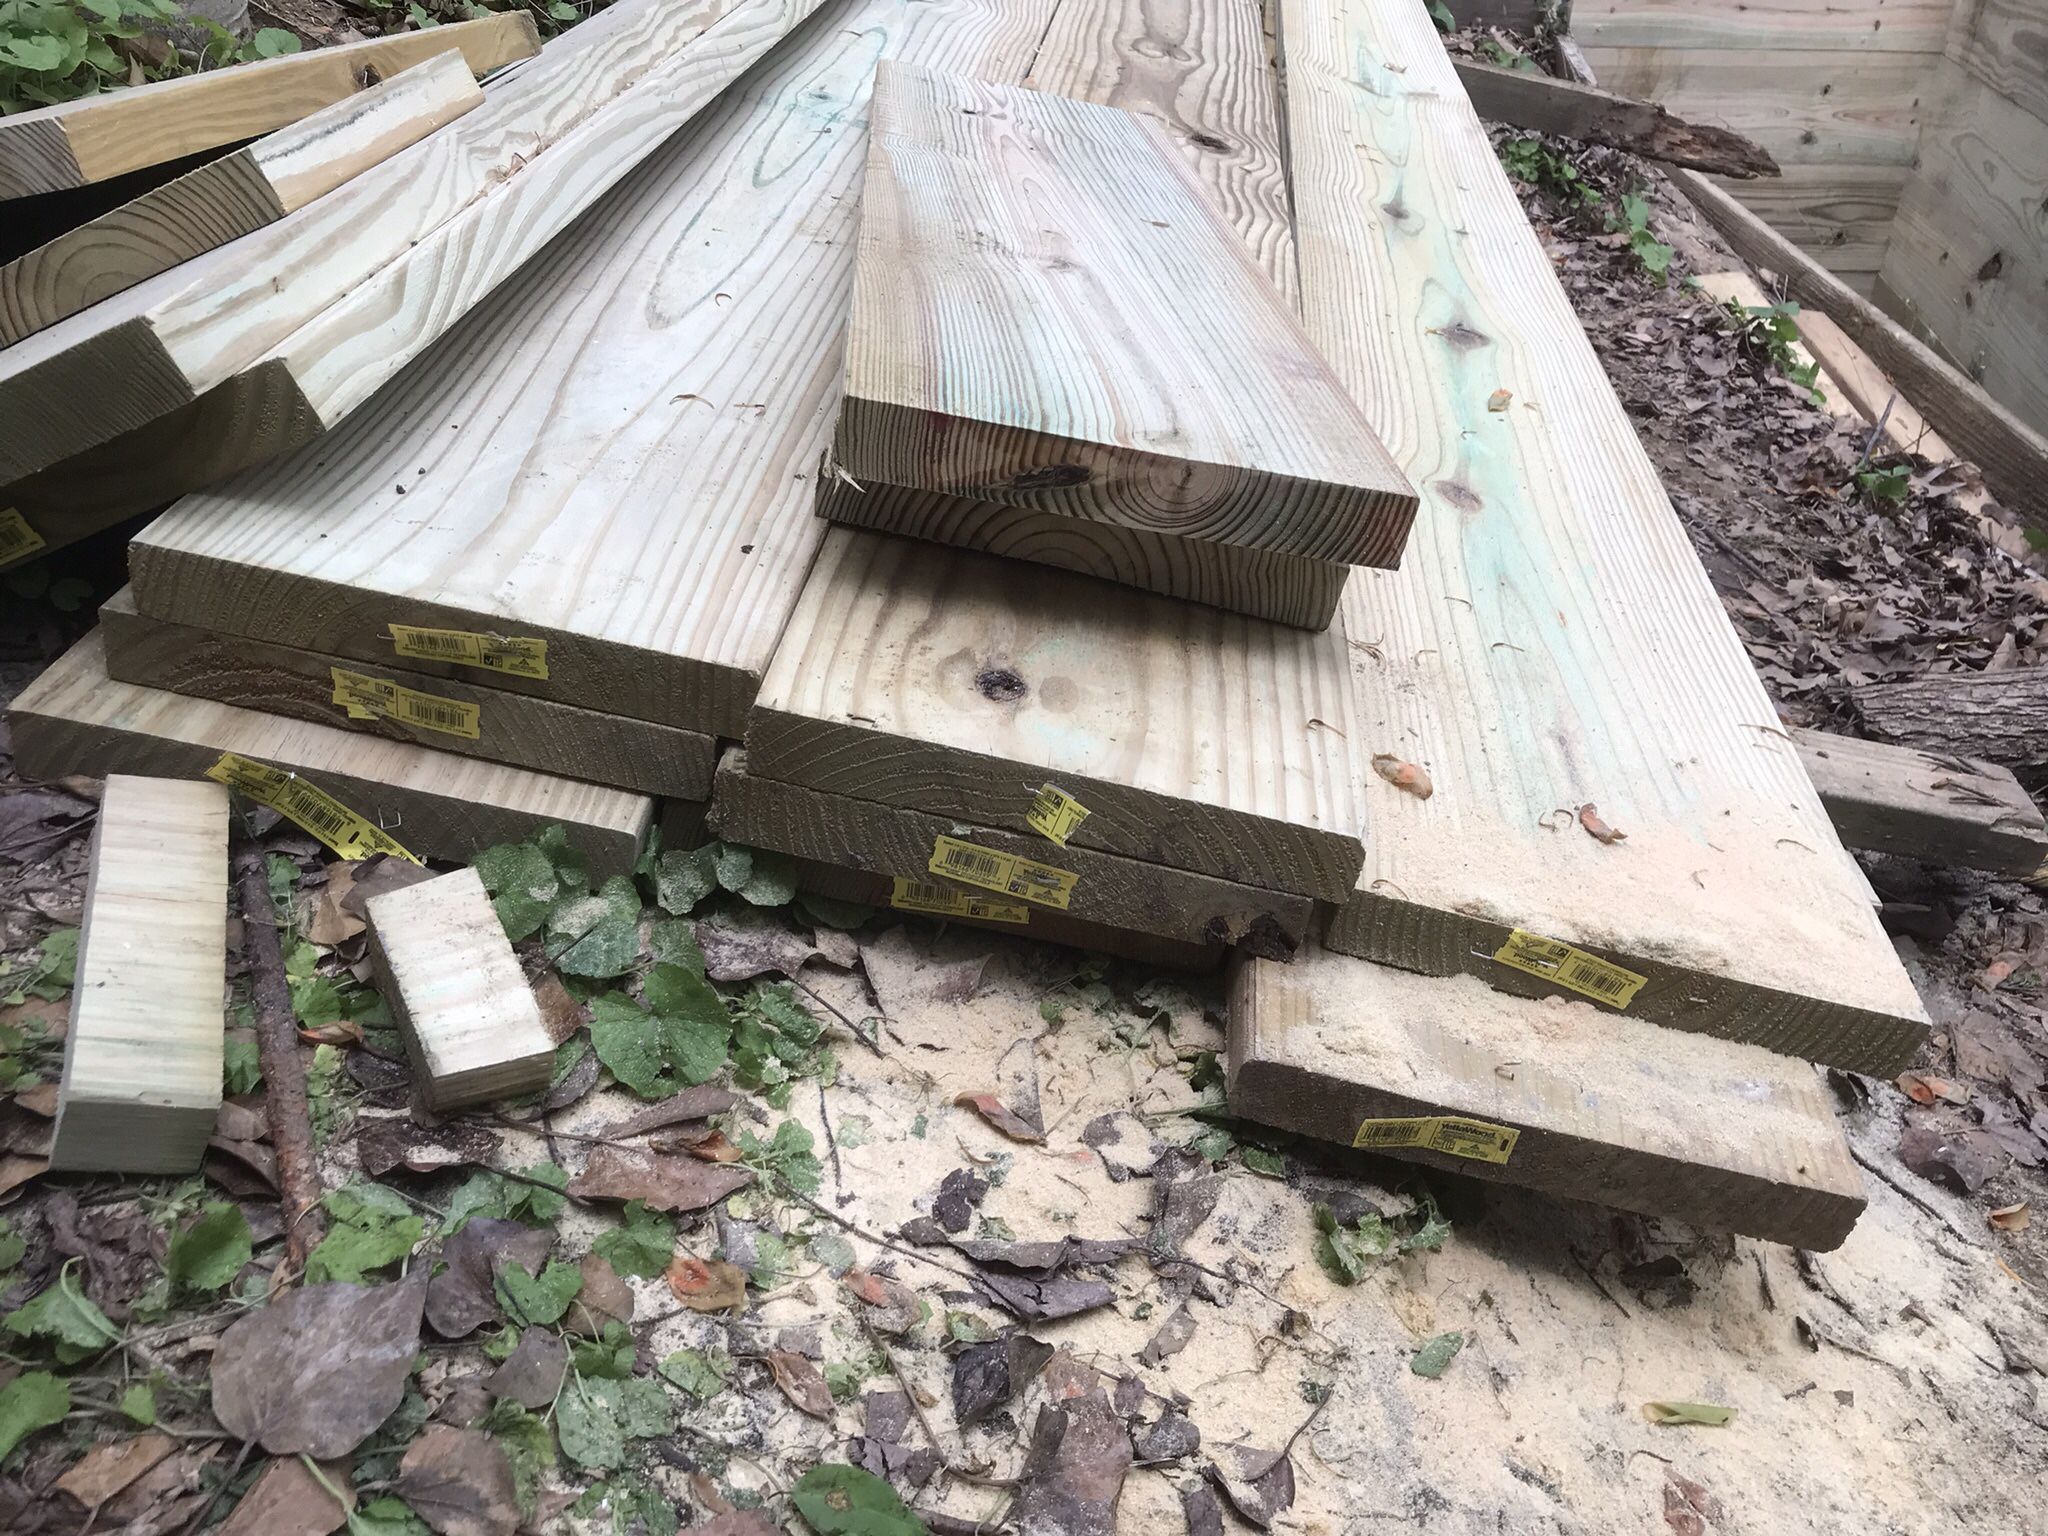 2x12 -10 Feet Long- Pressure treated wood – New A